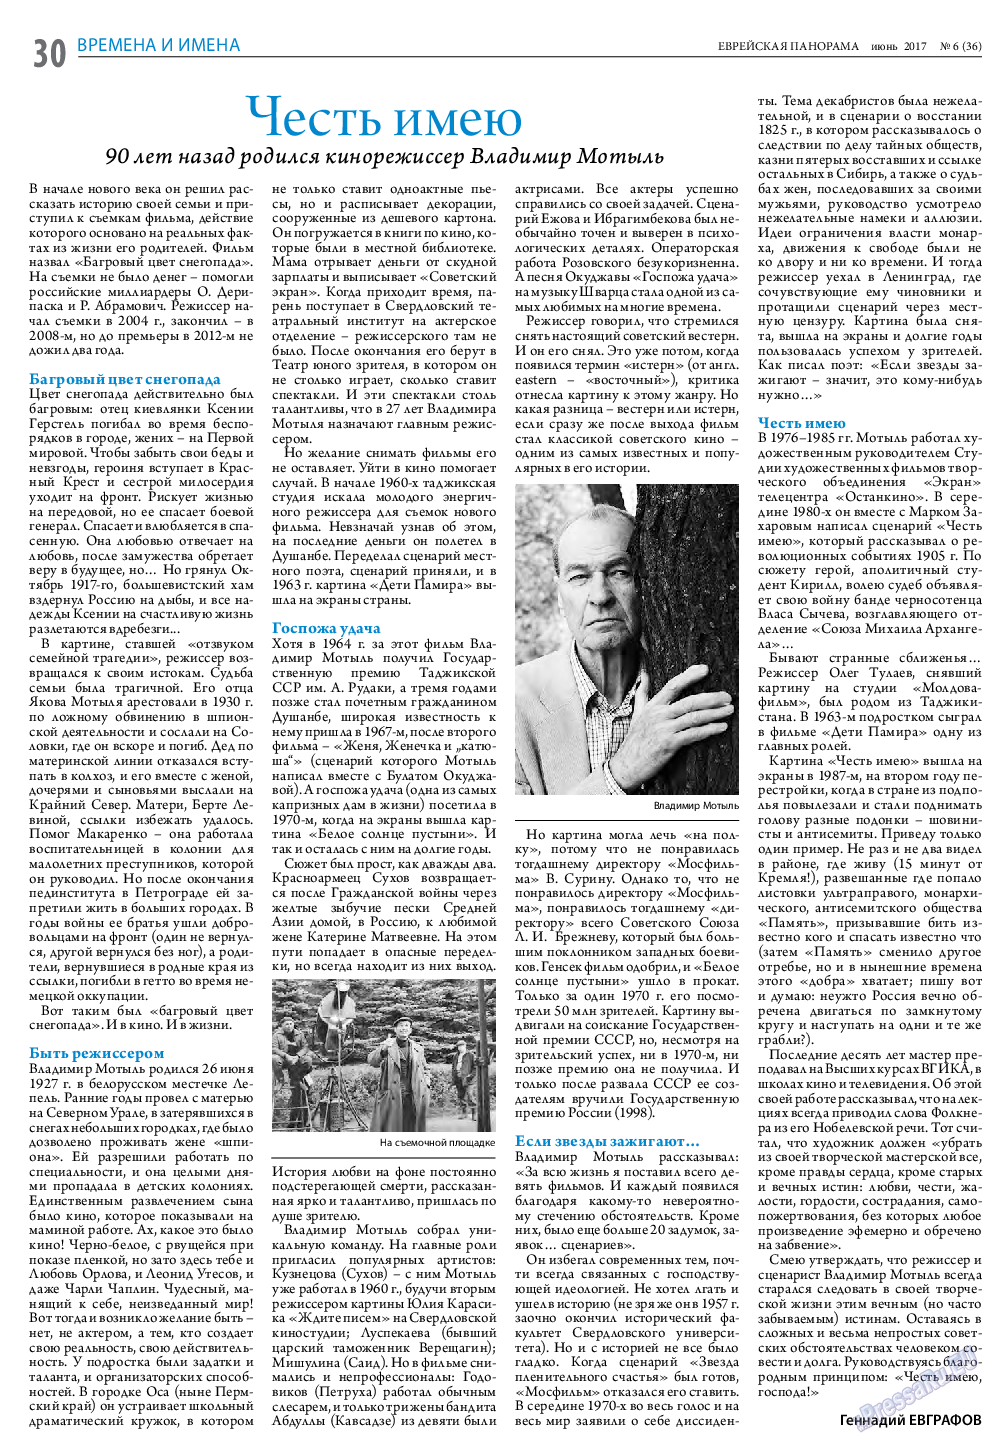 Еврейская панорама, газета. 2017 №6 стр.30